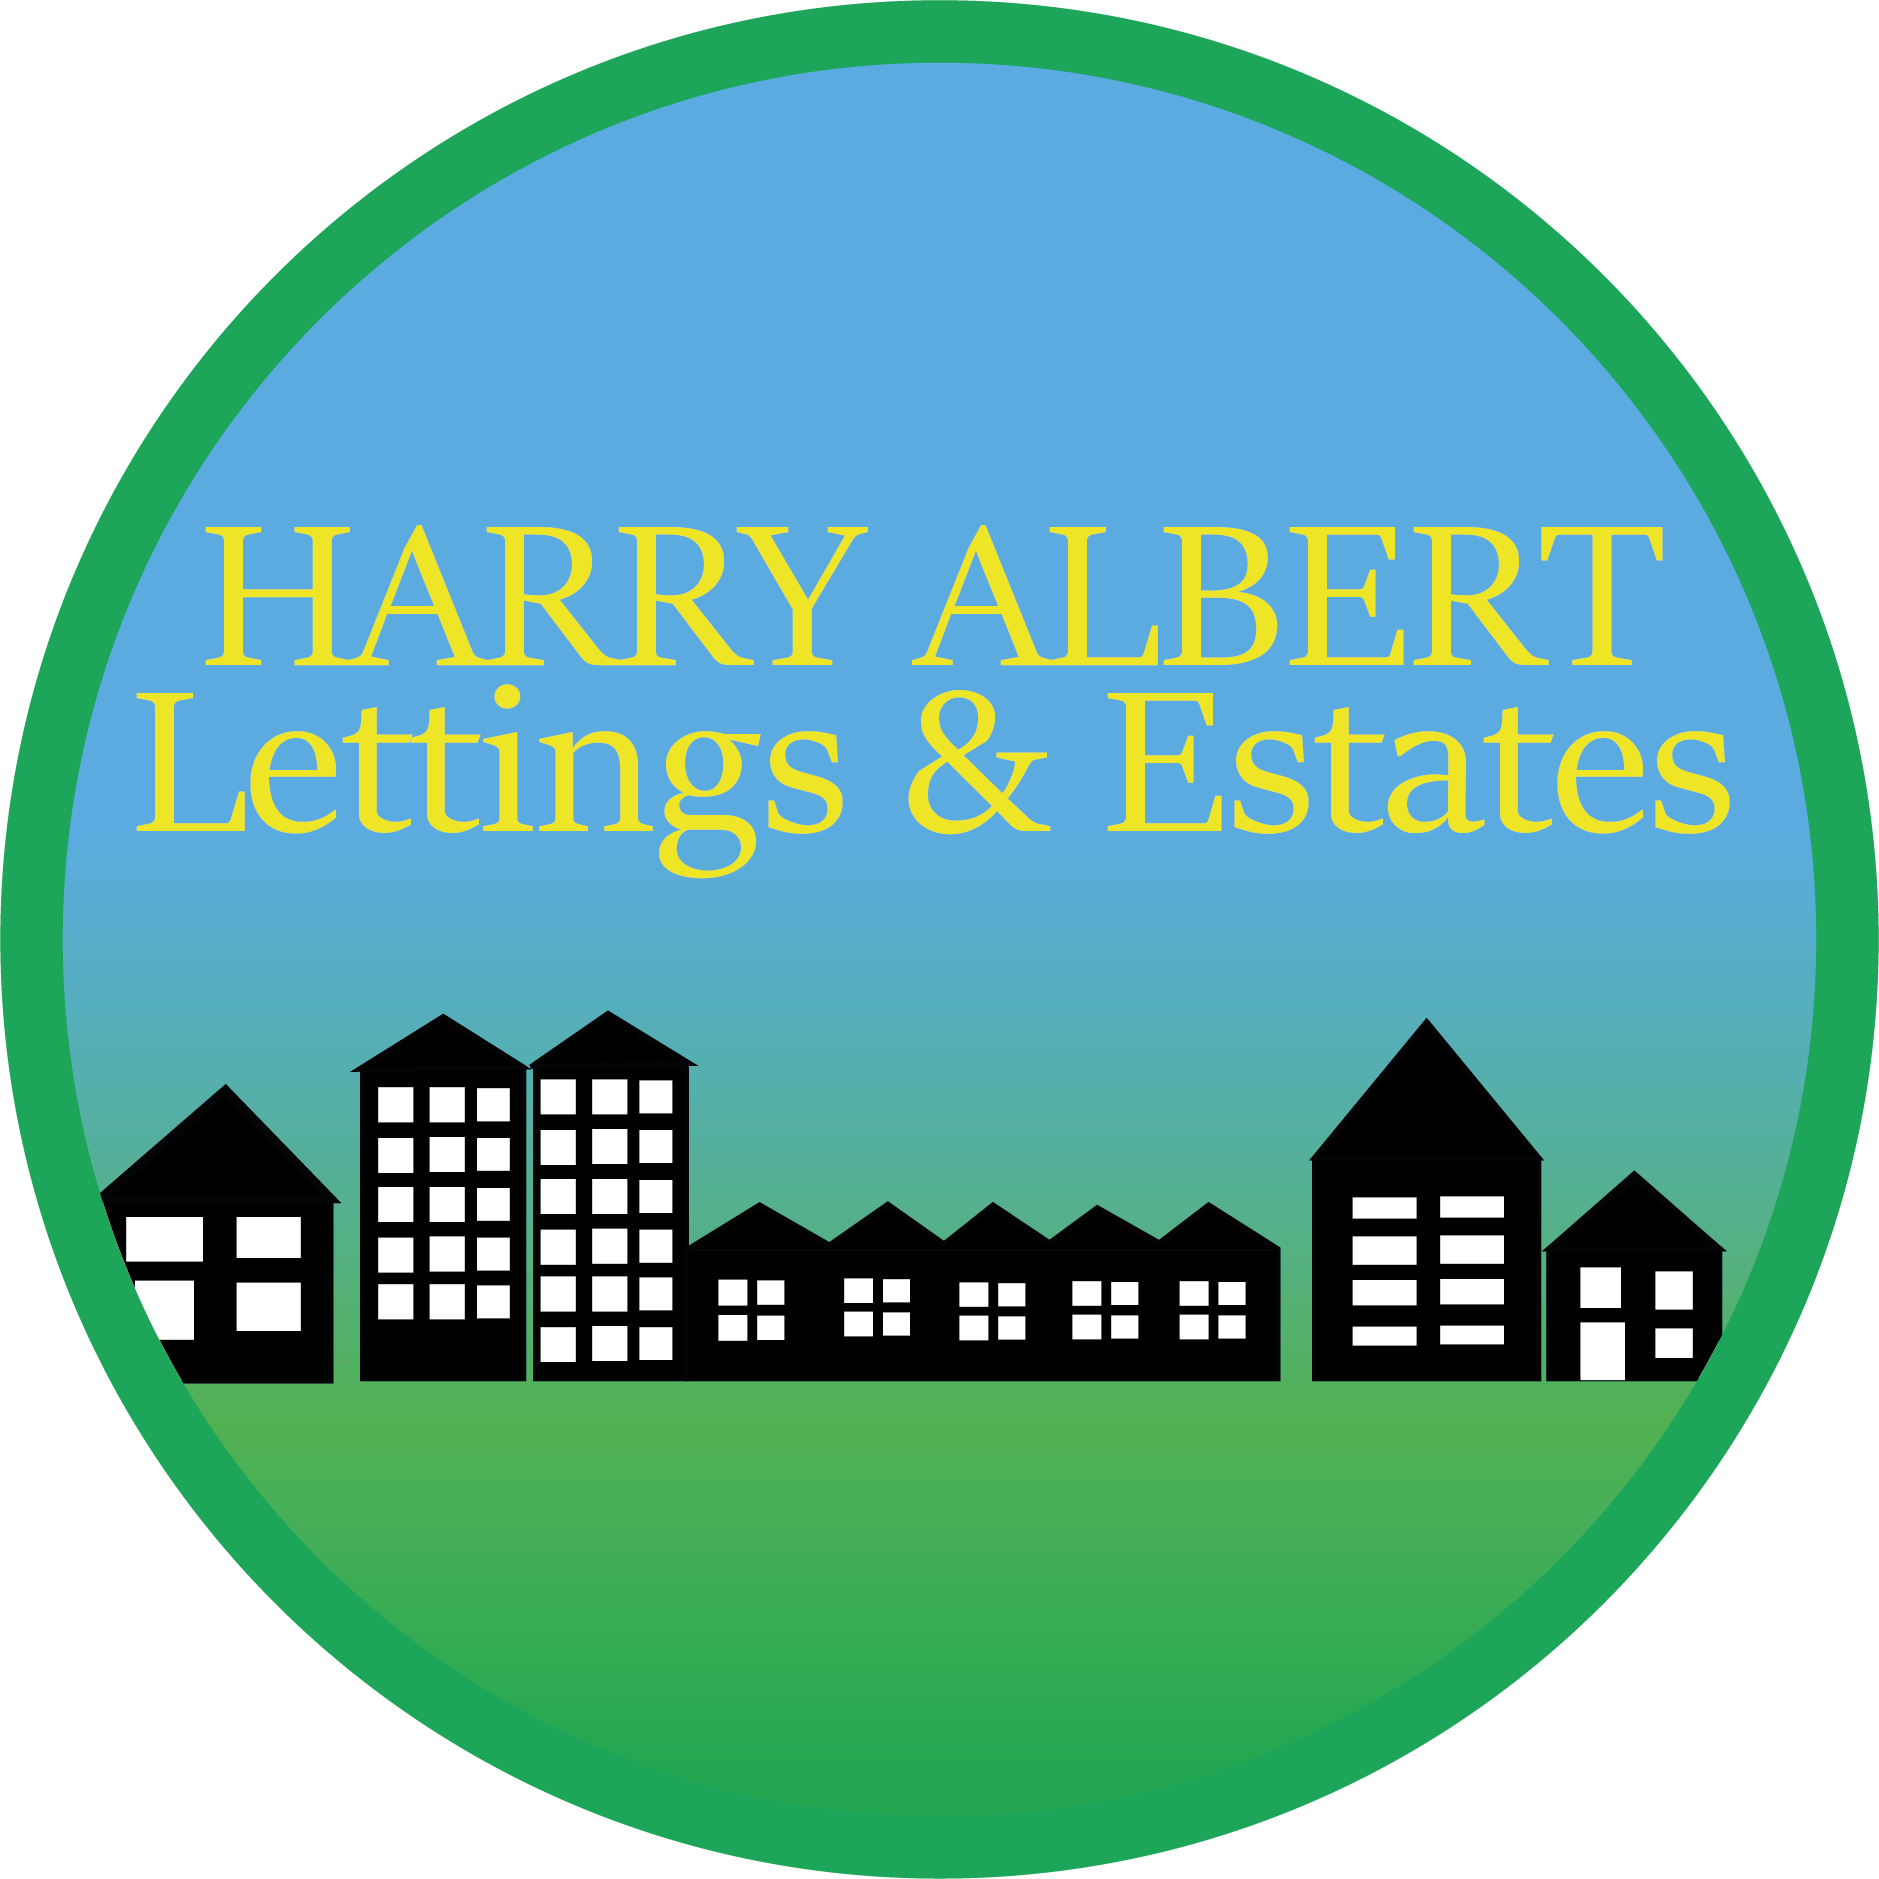 Harry Albert Lettings & Estates